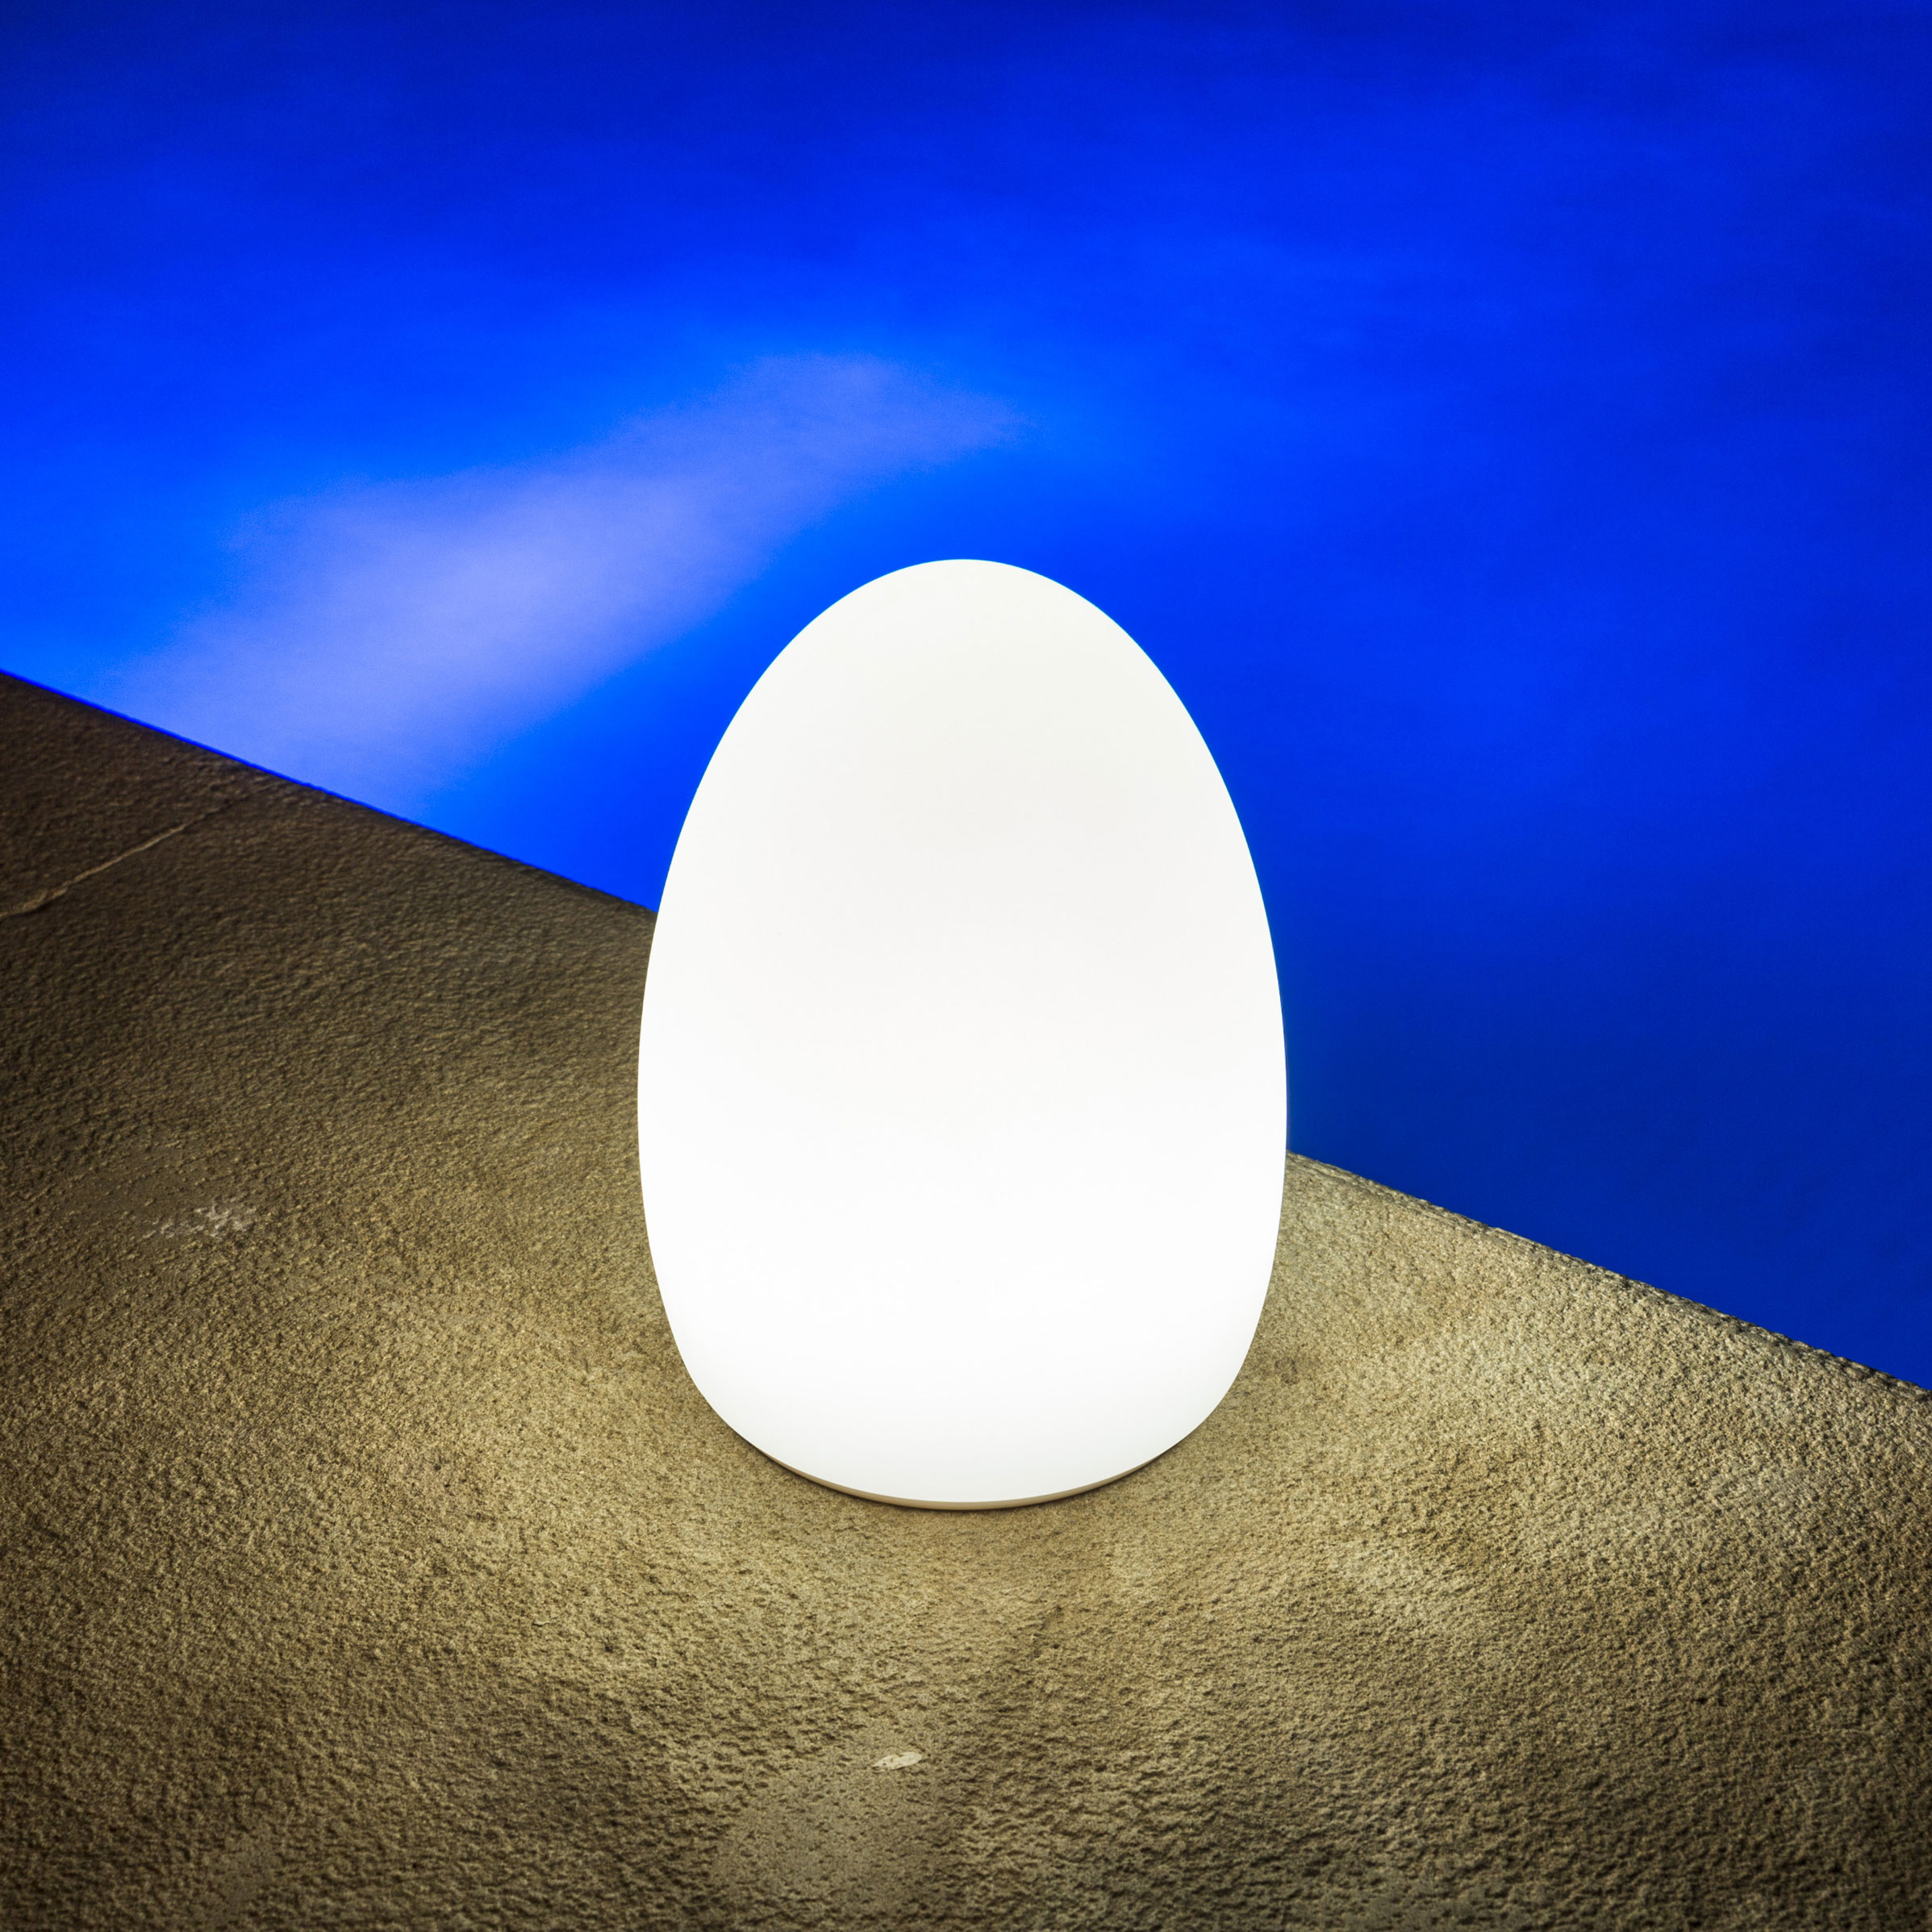 Koopje Onmogelijk maag Egg Bluetooth Indoor / Outdoor LED Lamp by Smart & Green | SG-Egg | SMG60952